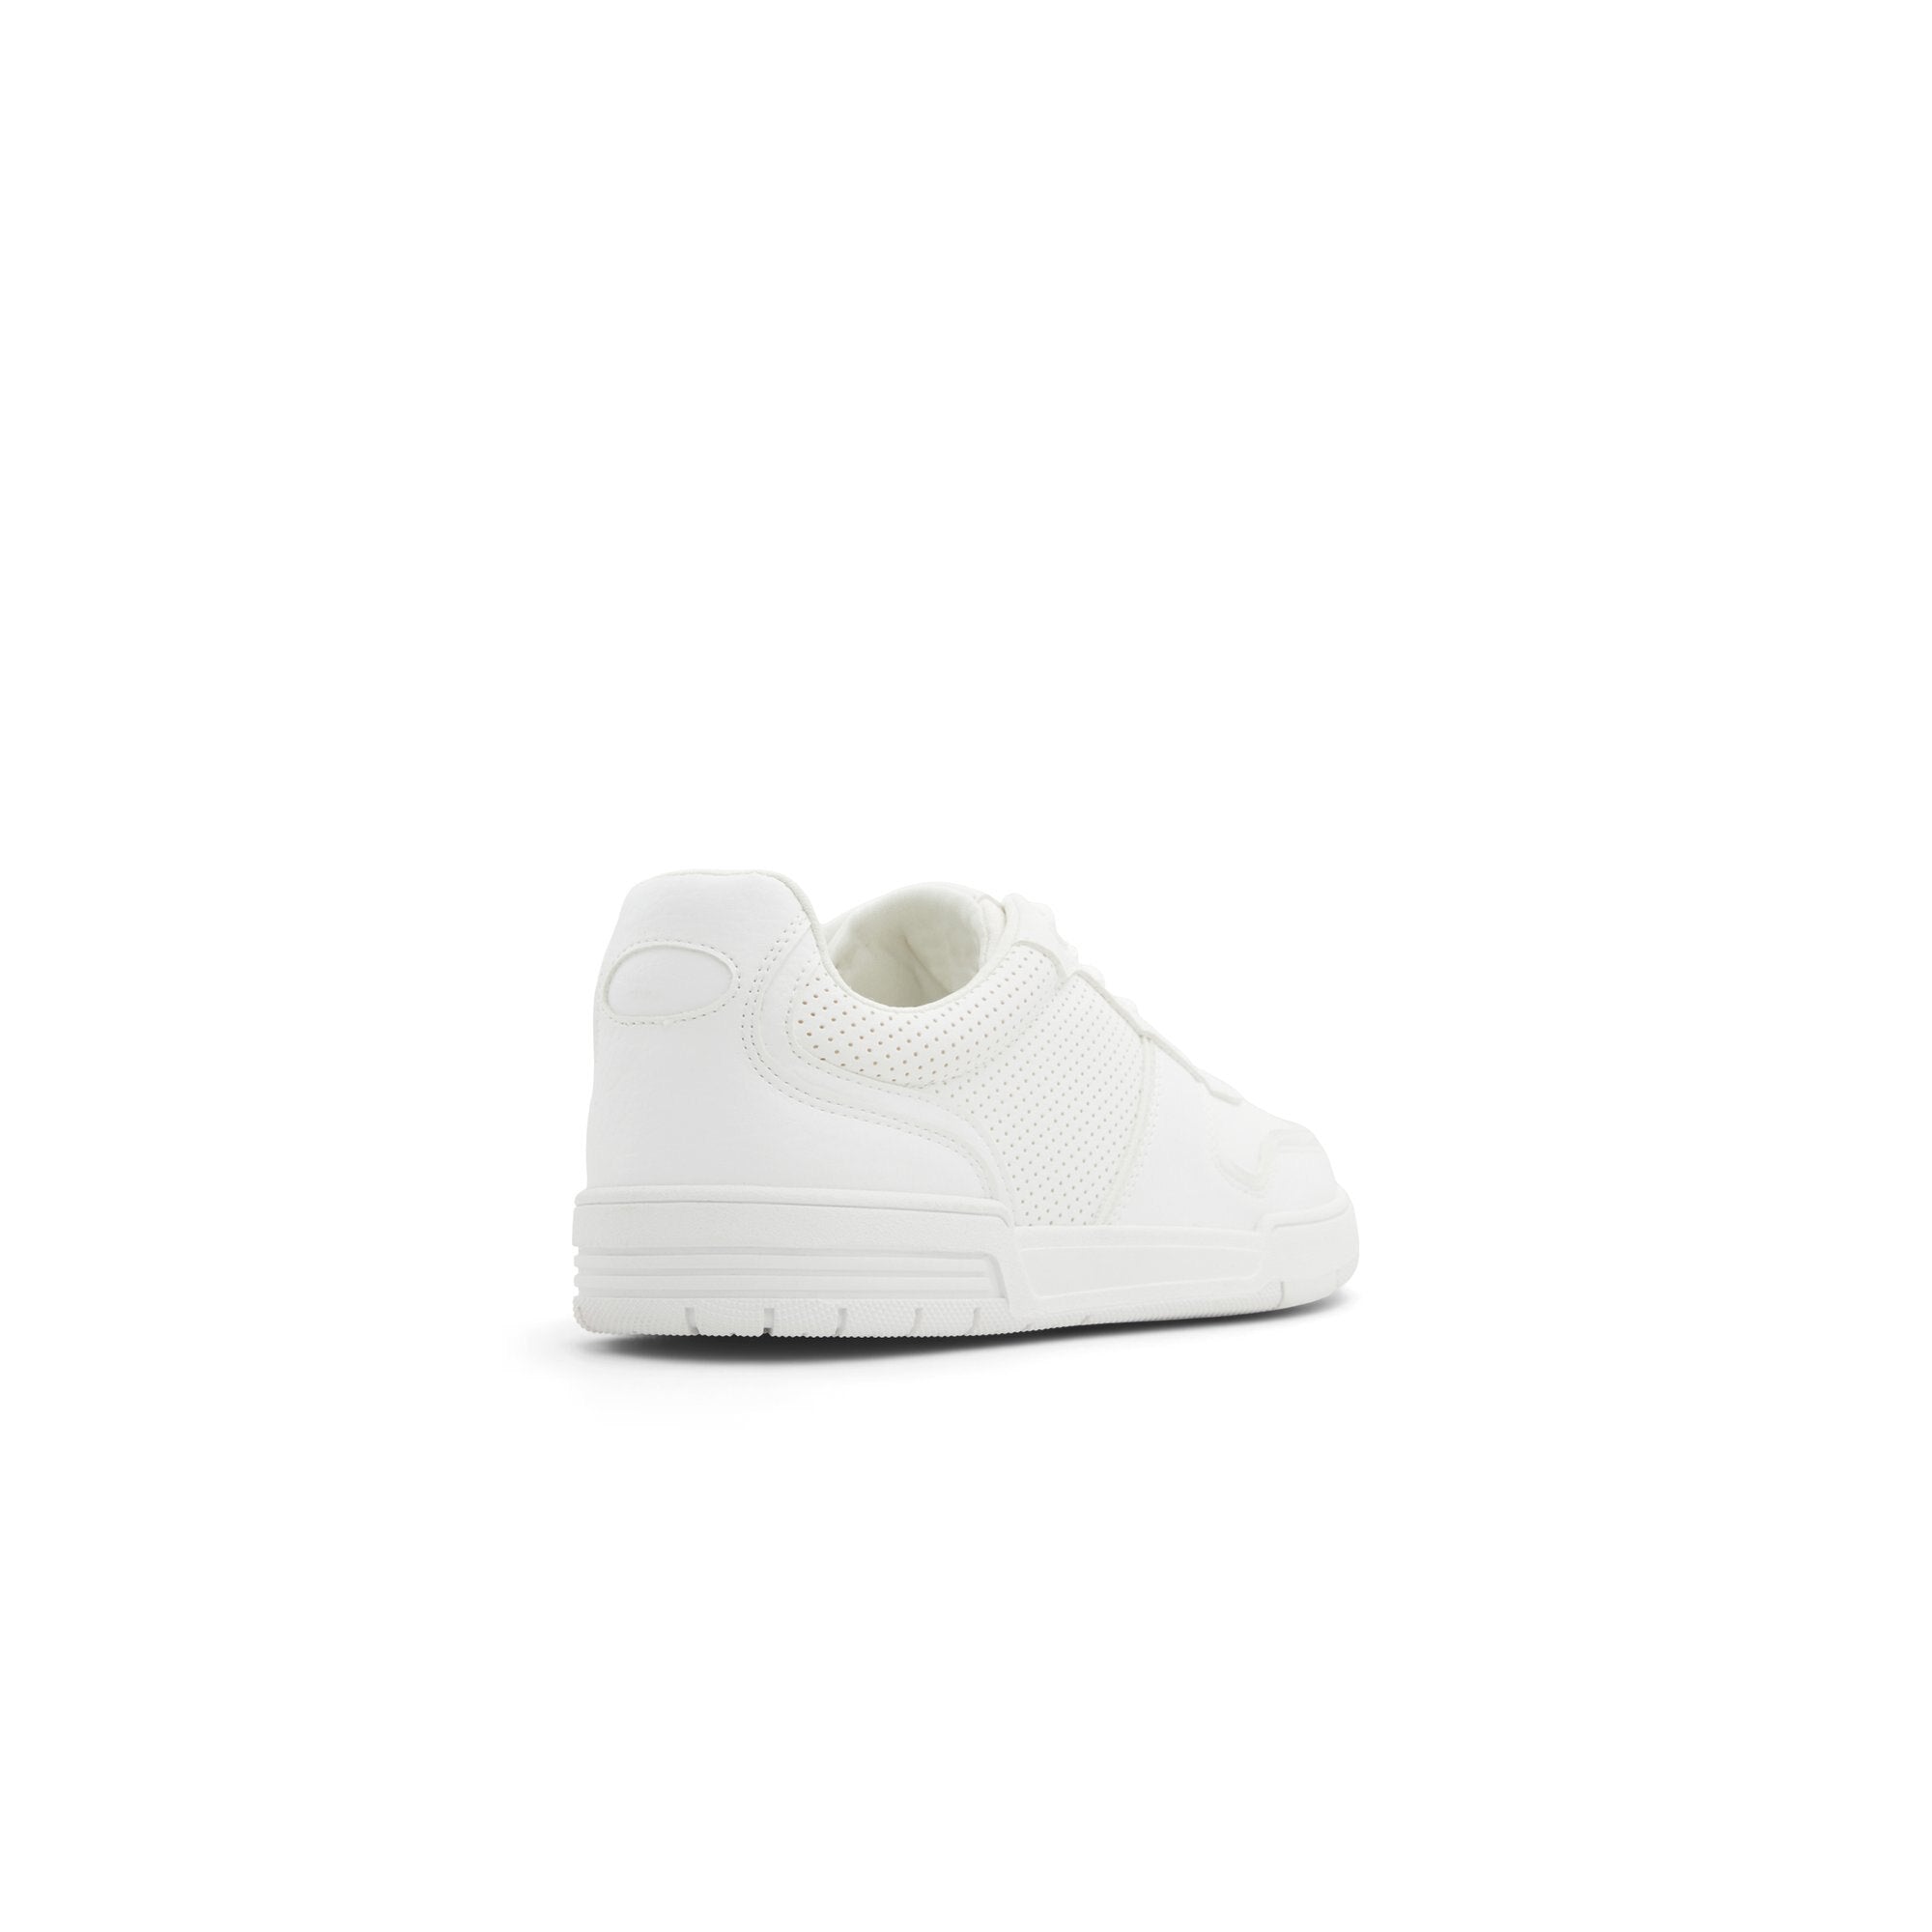 Wylderr / Sneakers Women Shoes - White - CALL IT SPRING KSA